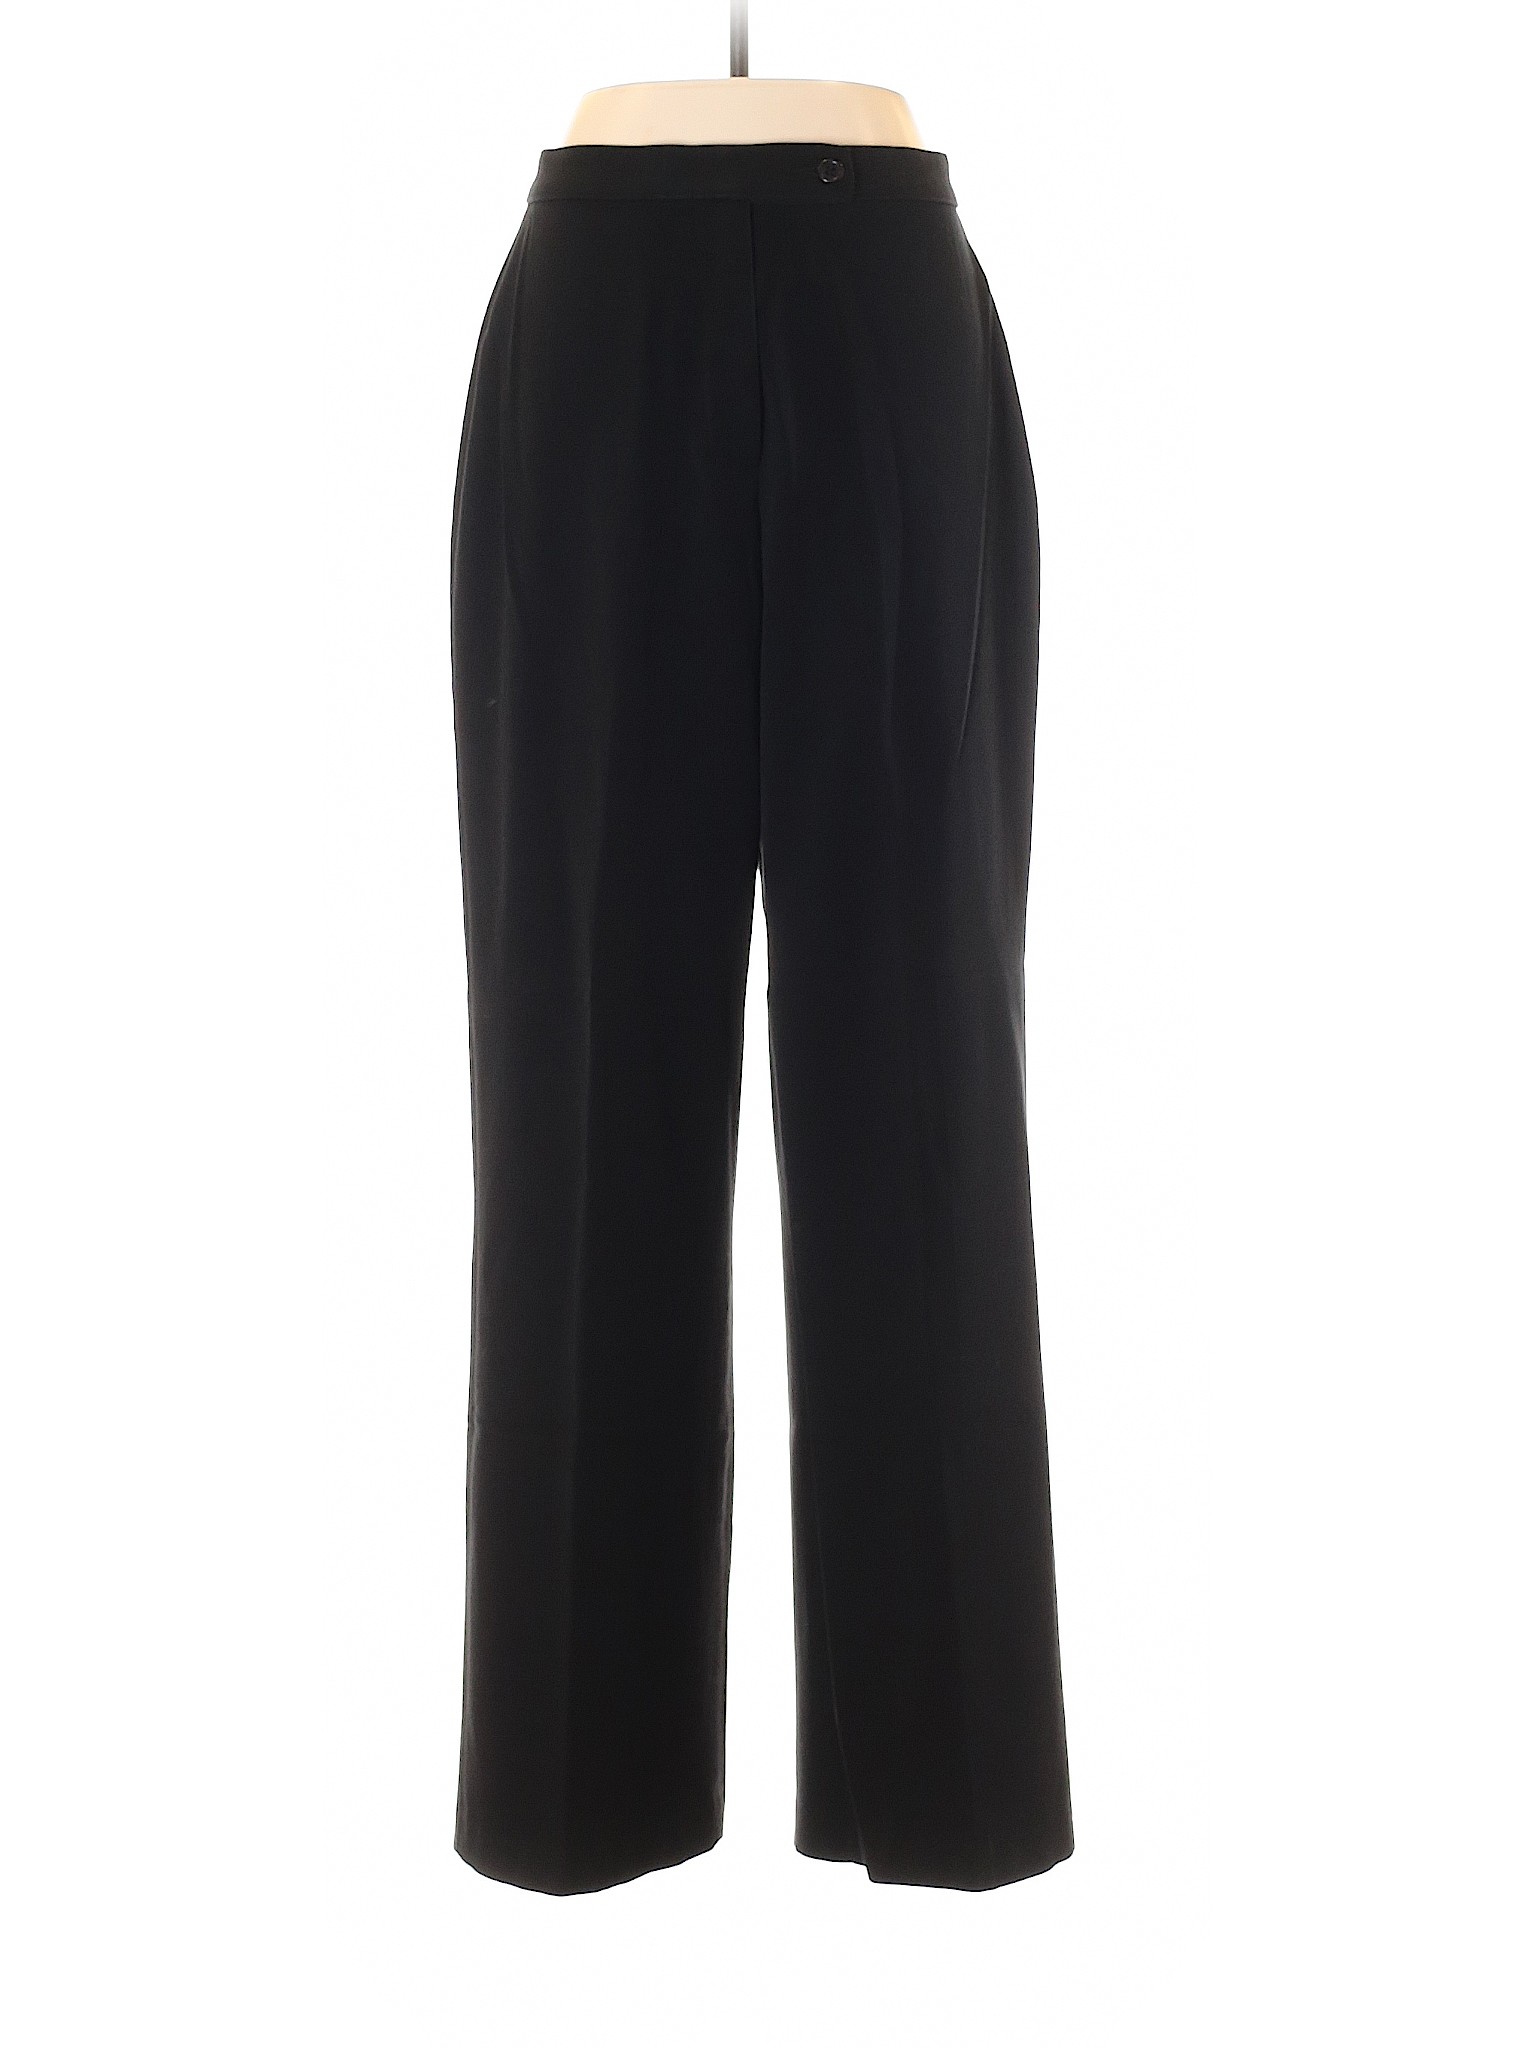 Kim Rogers Signature Solid Black Casual Pants Size 8 - 86% off | thredUP